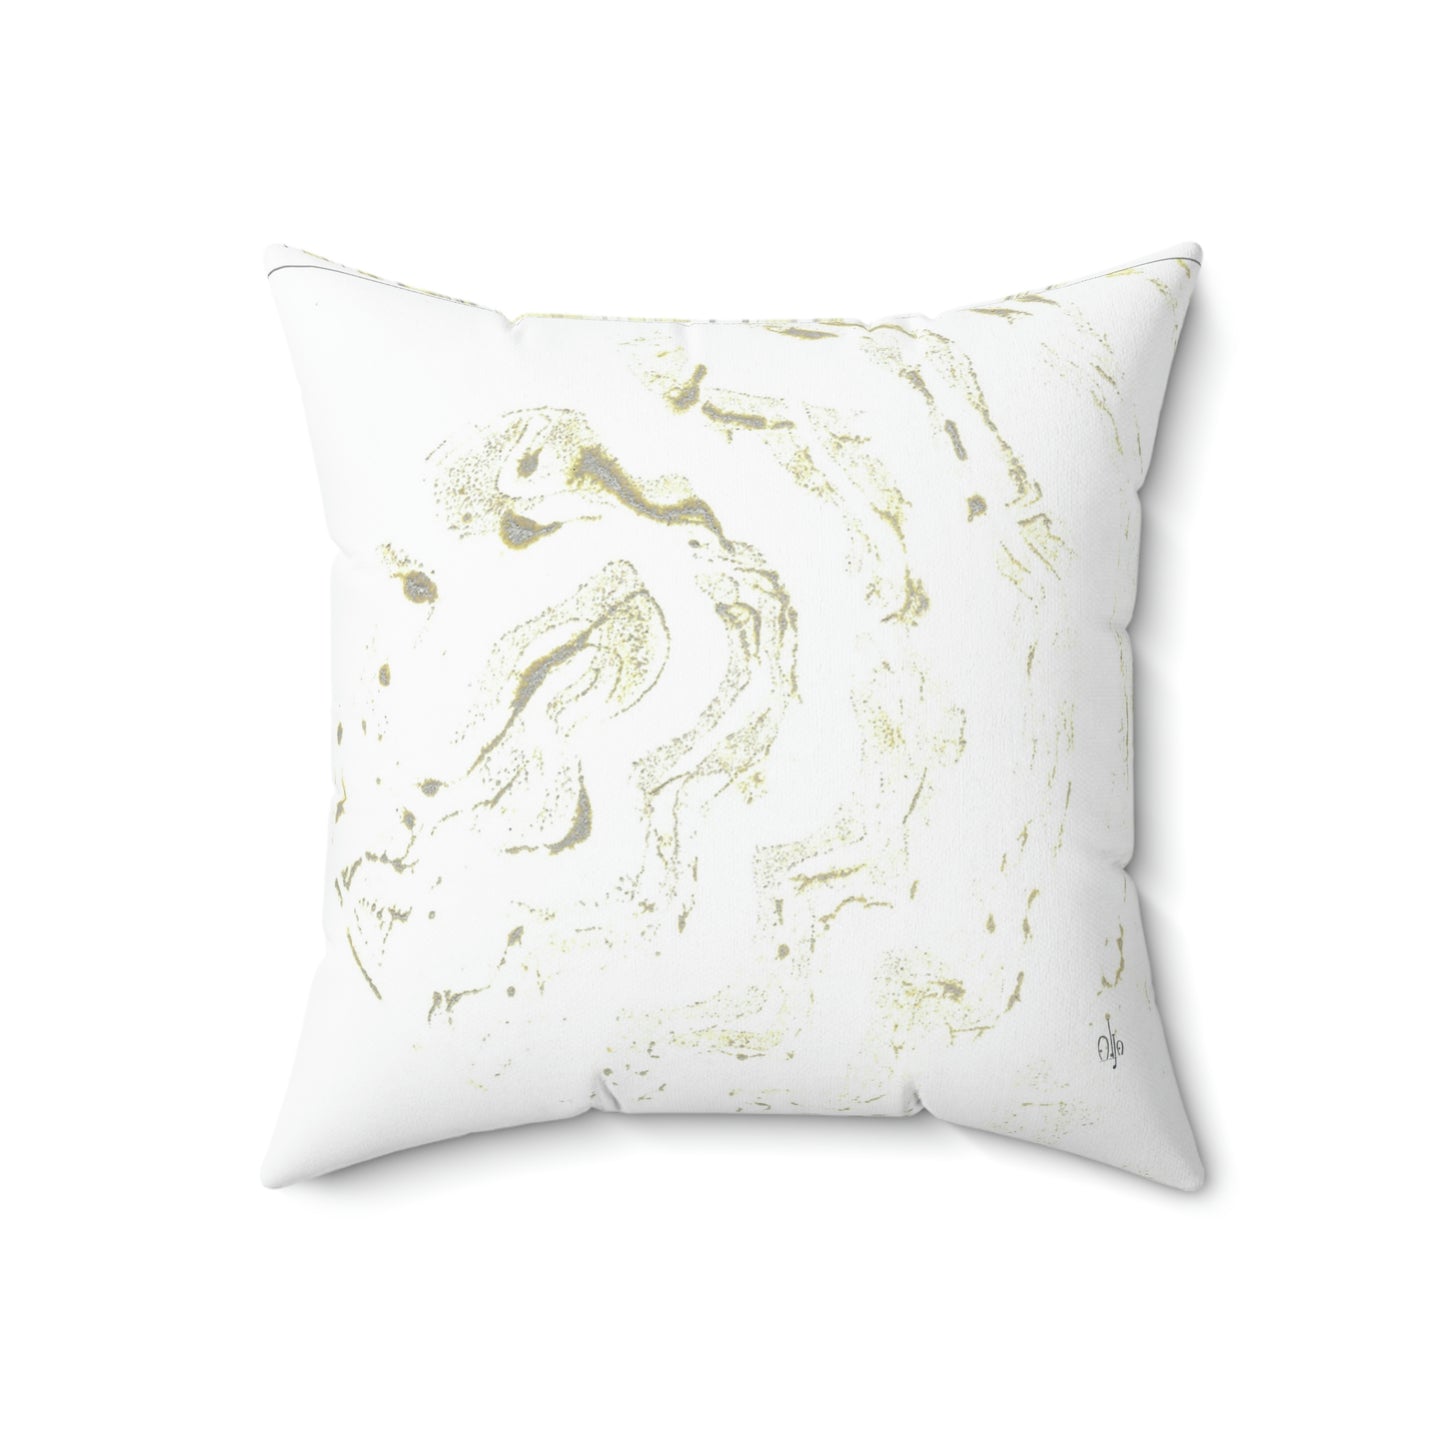 Faded Shell Square Pillow - Alja Design